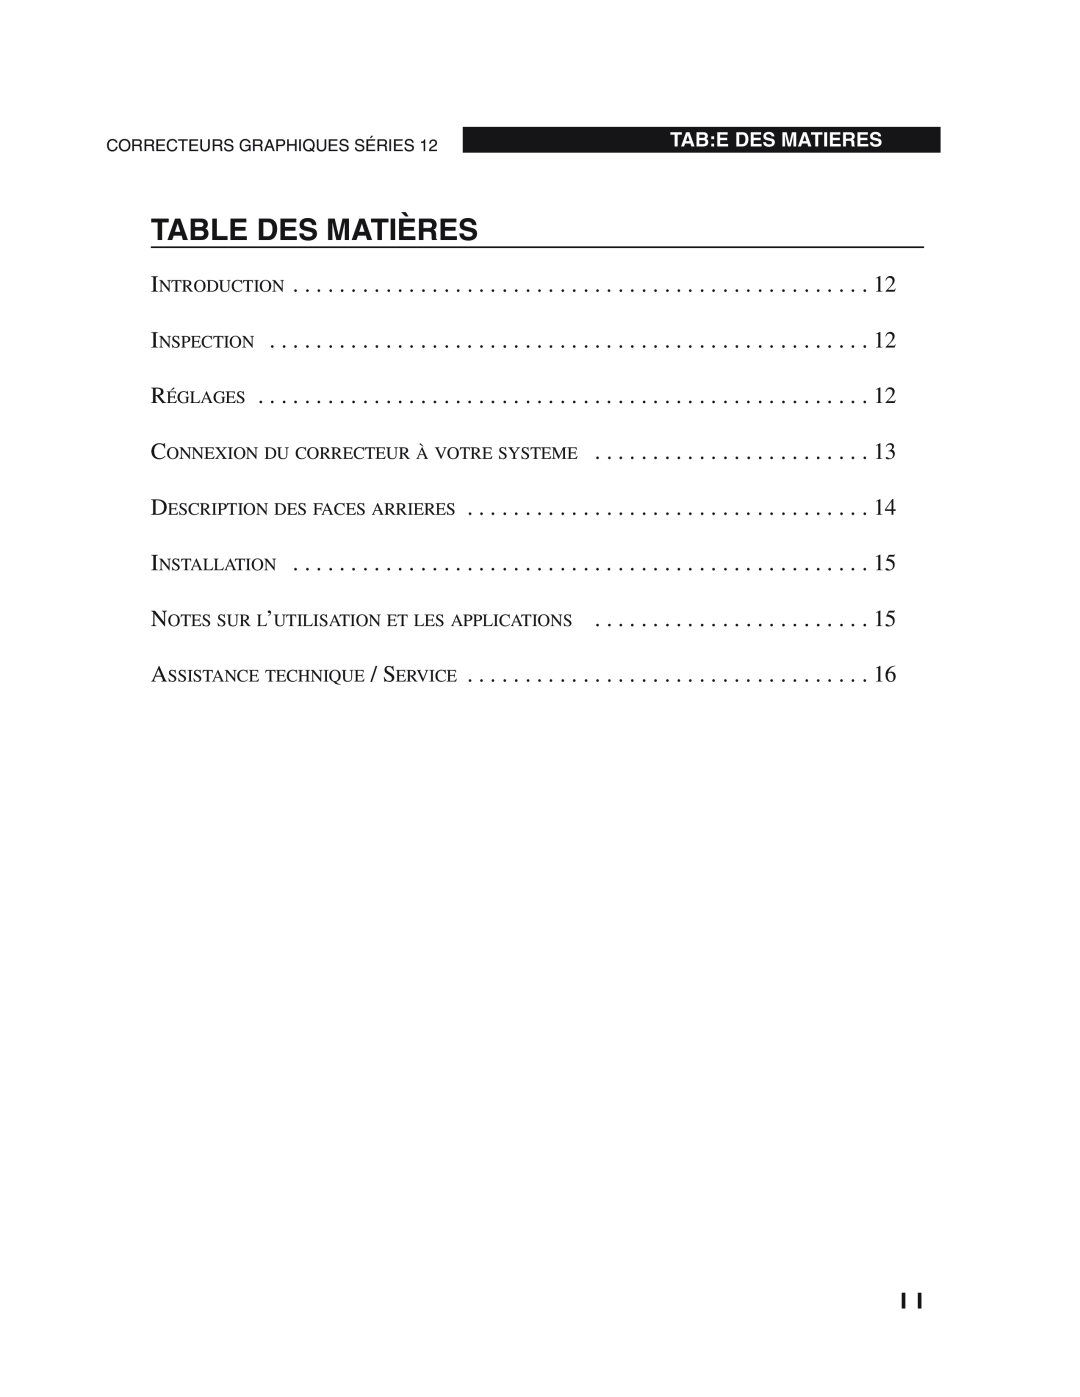 dbx Pro 12 Series operation manual Table Des Matières 